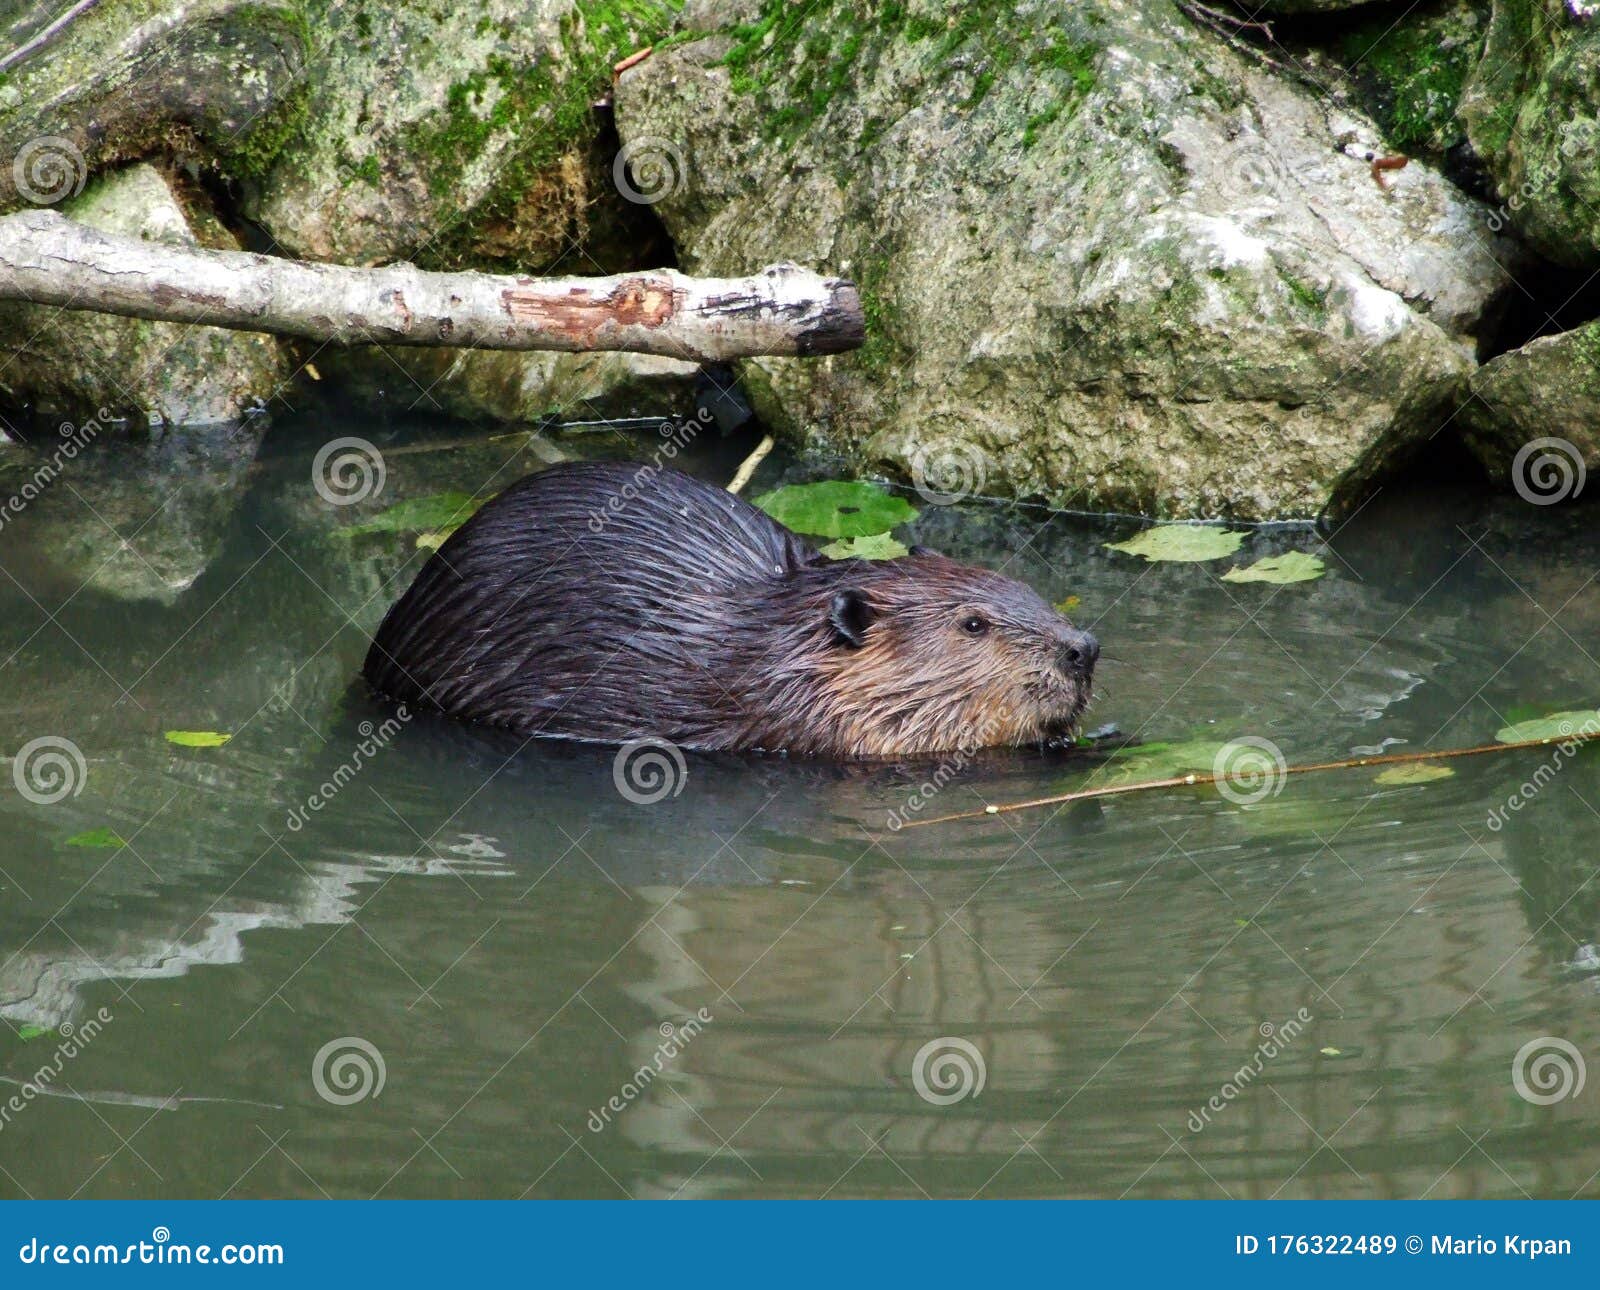 north american beaver castor canadensis, der kanadische biber oder amerikanische biber or kanadski bober - zoo ljubljana